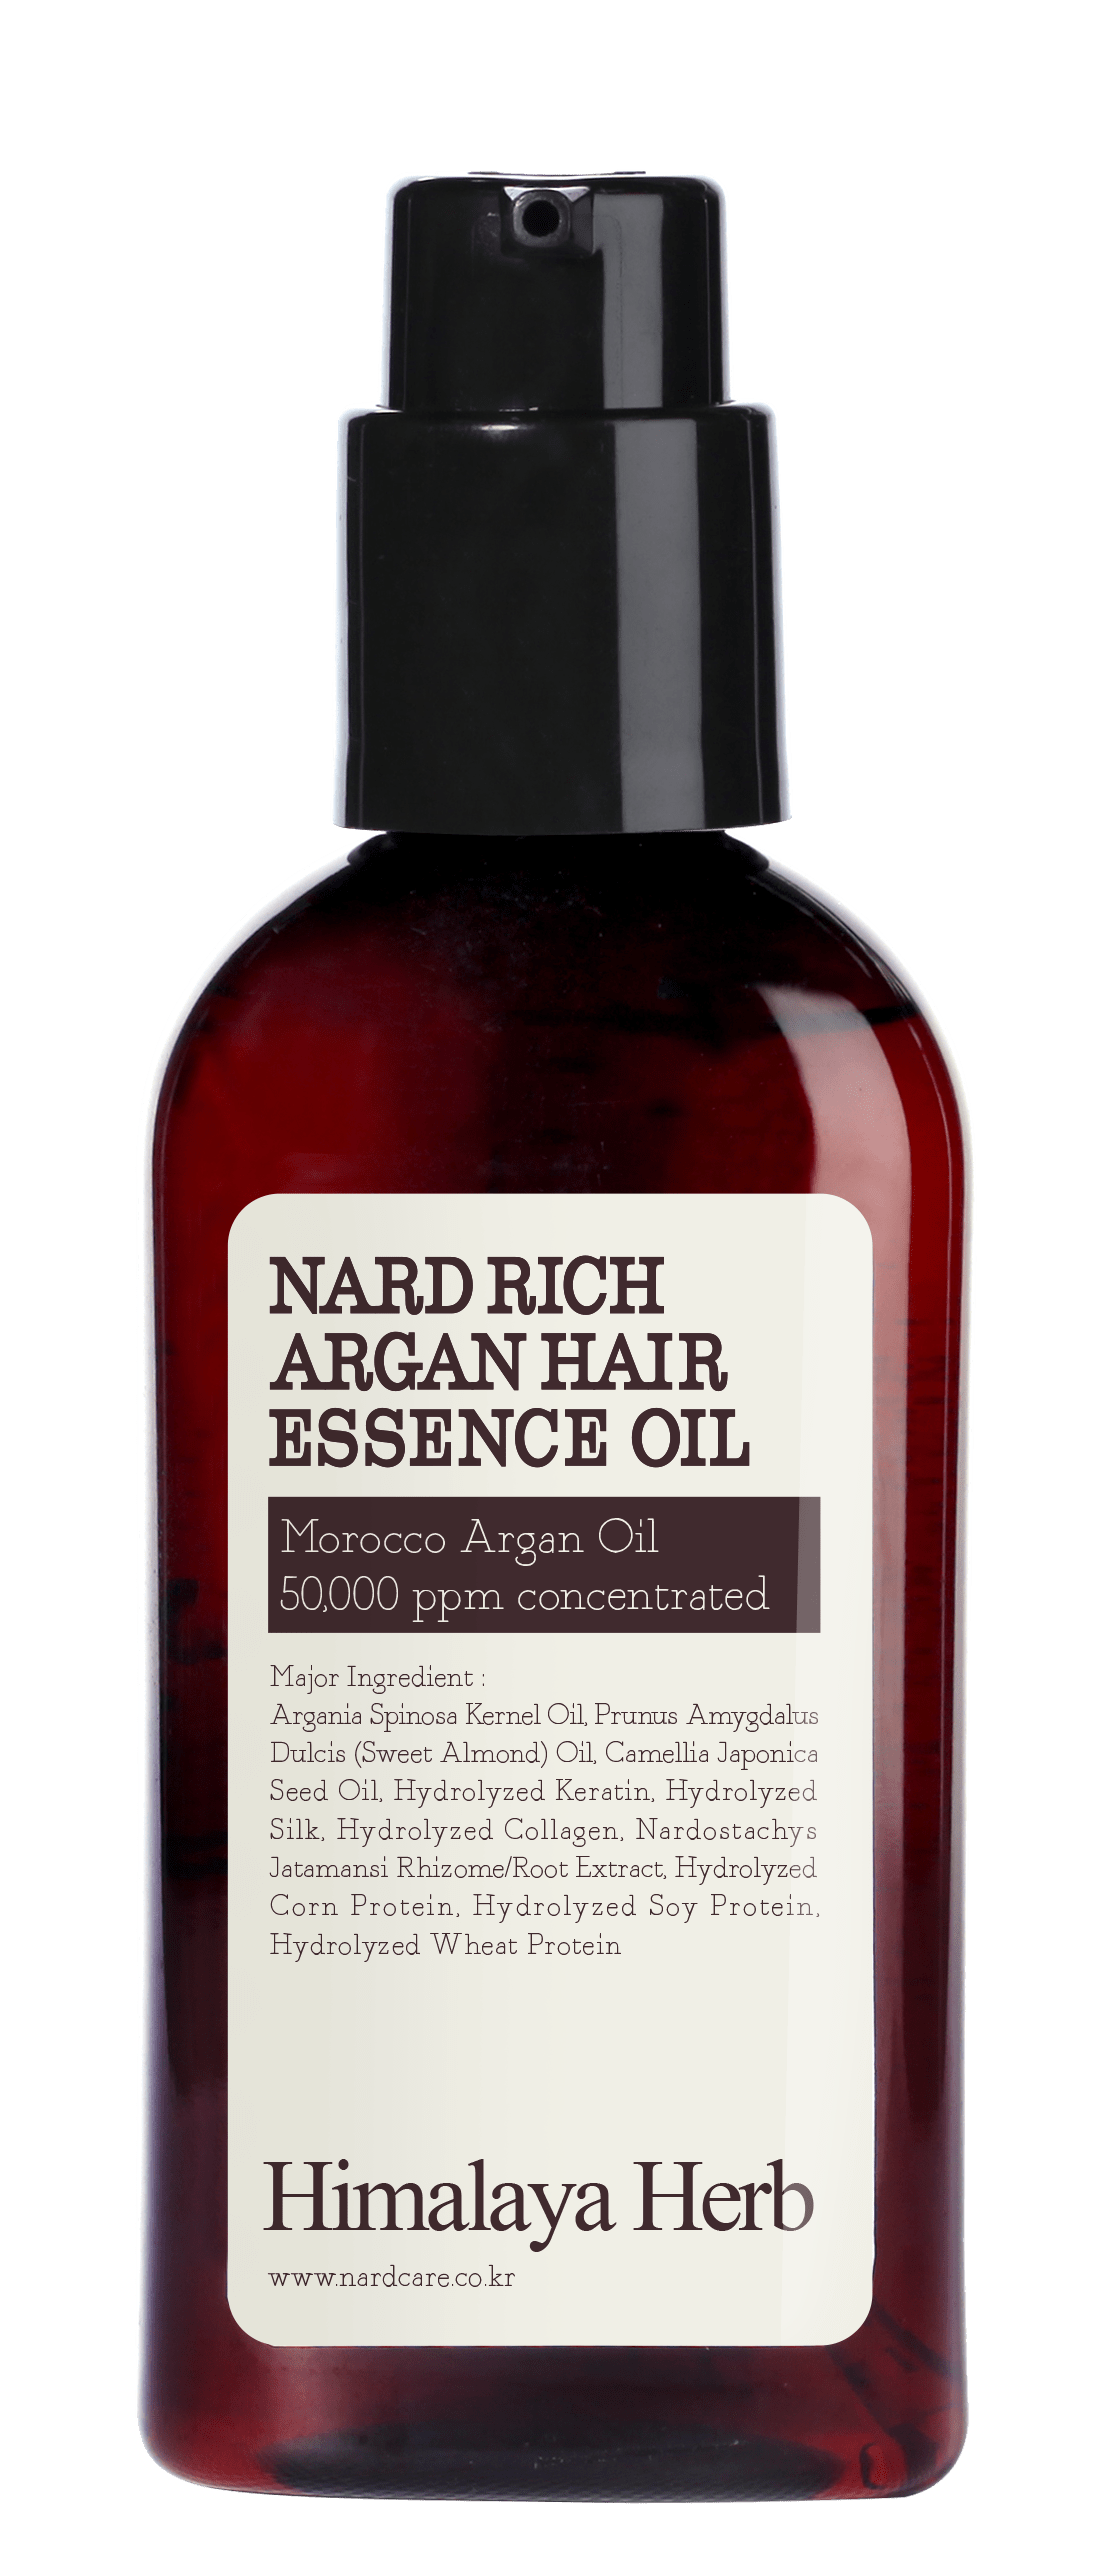 skincare-kbeauty-glowtime-nard rich argan hair essence oil